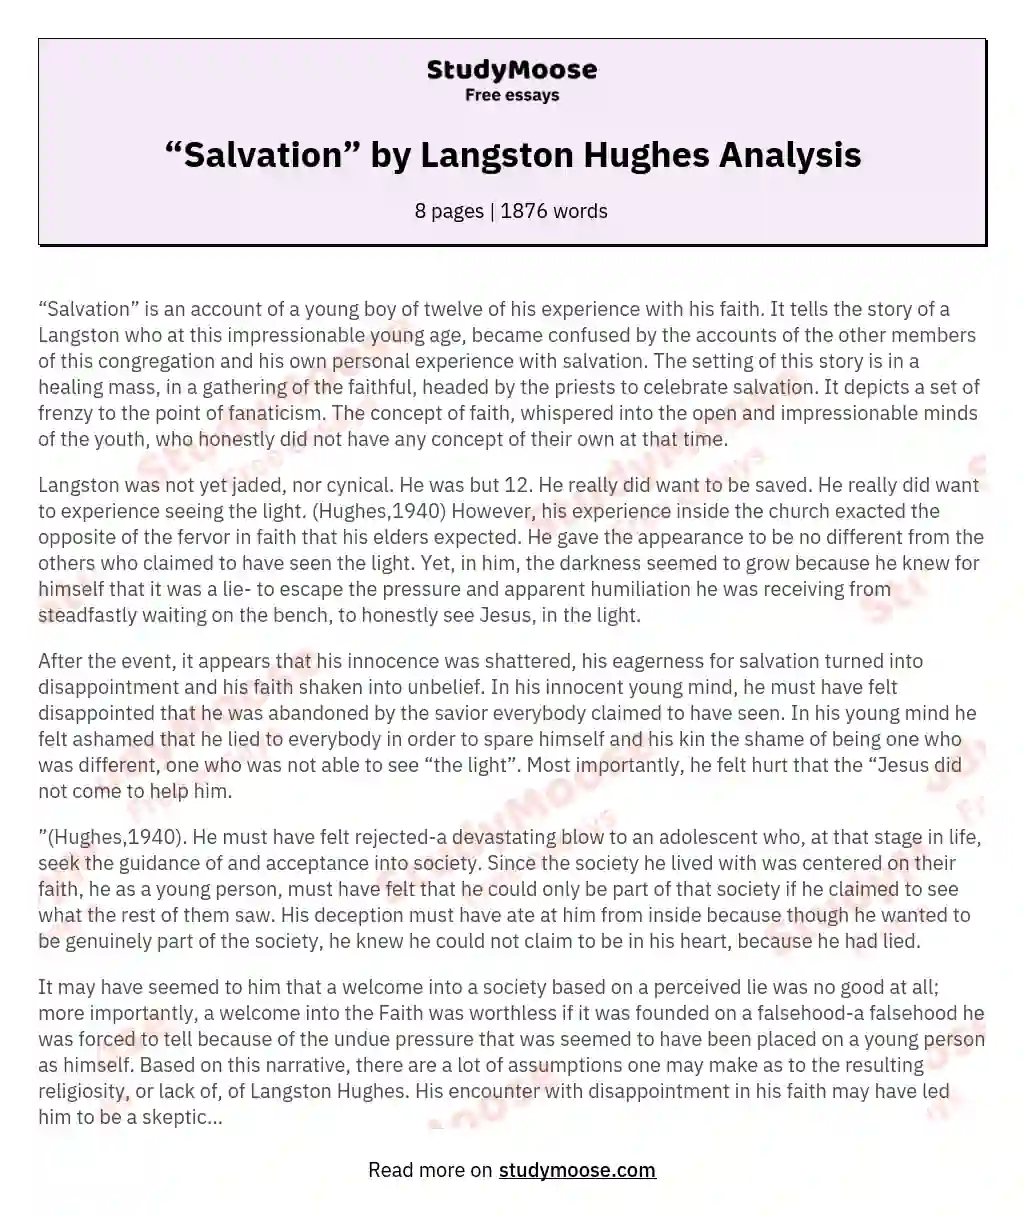 “Salvation” by Langston Hughes Analysis essay